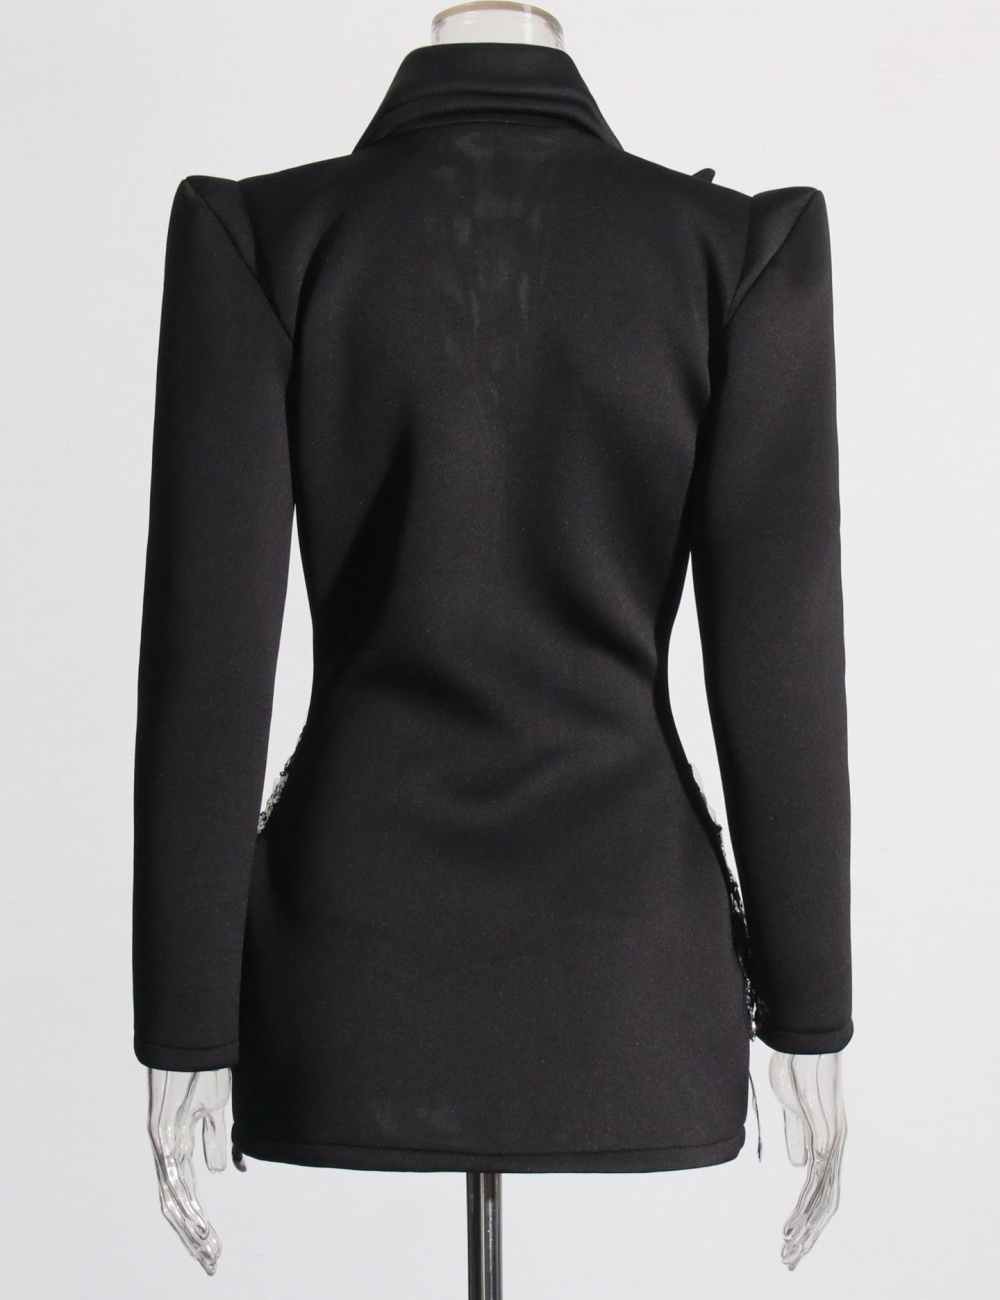 Spring splice dress elegant sequins business suit for women